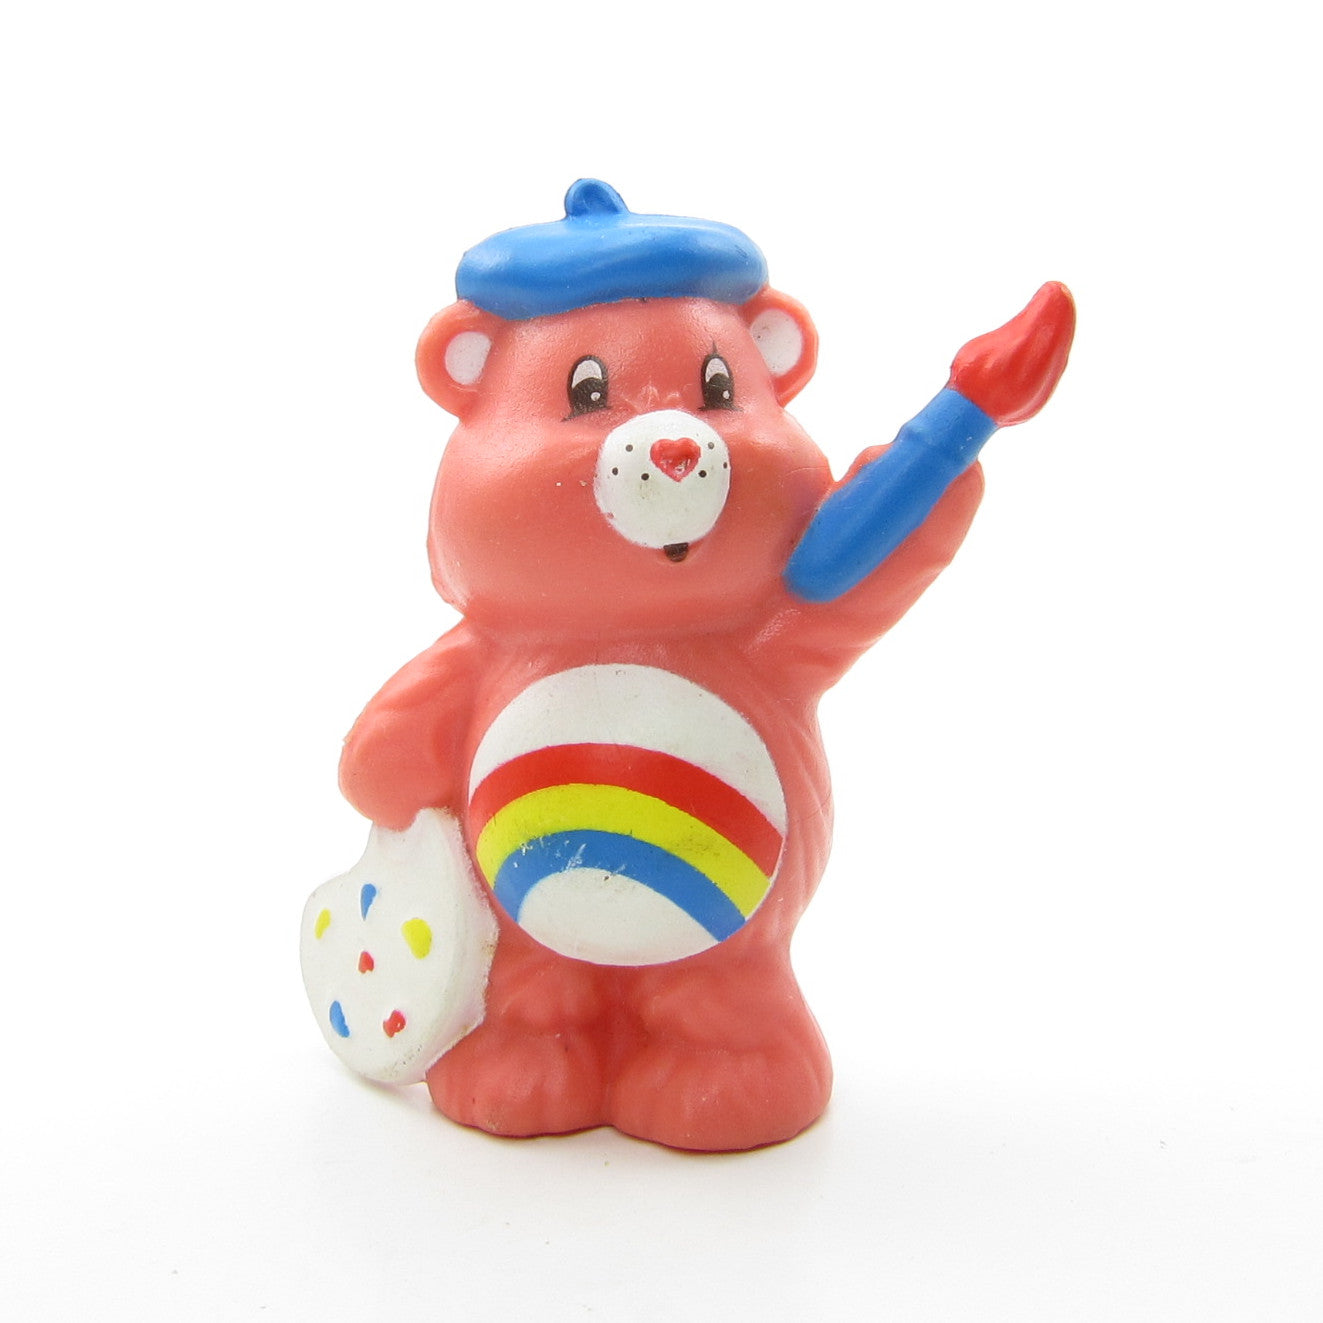 Cheer Bear creating a cheerful picture Care Bears miniature figurine